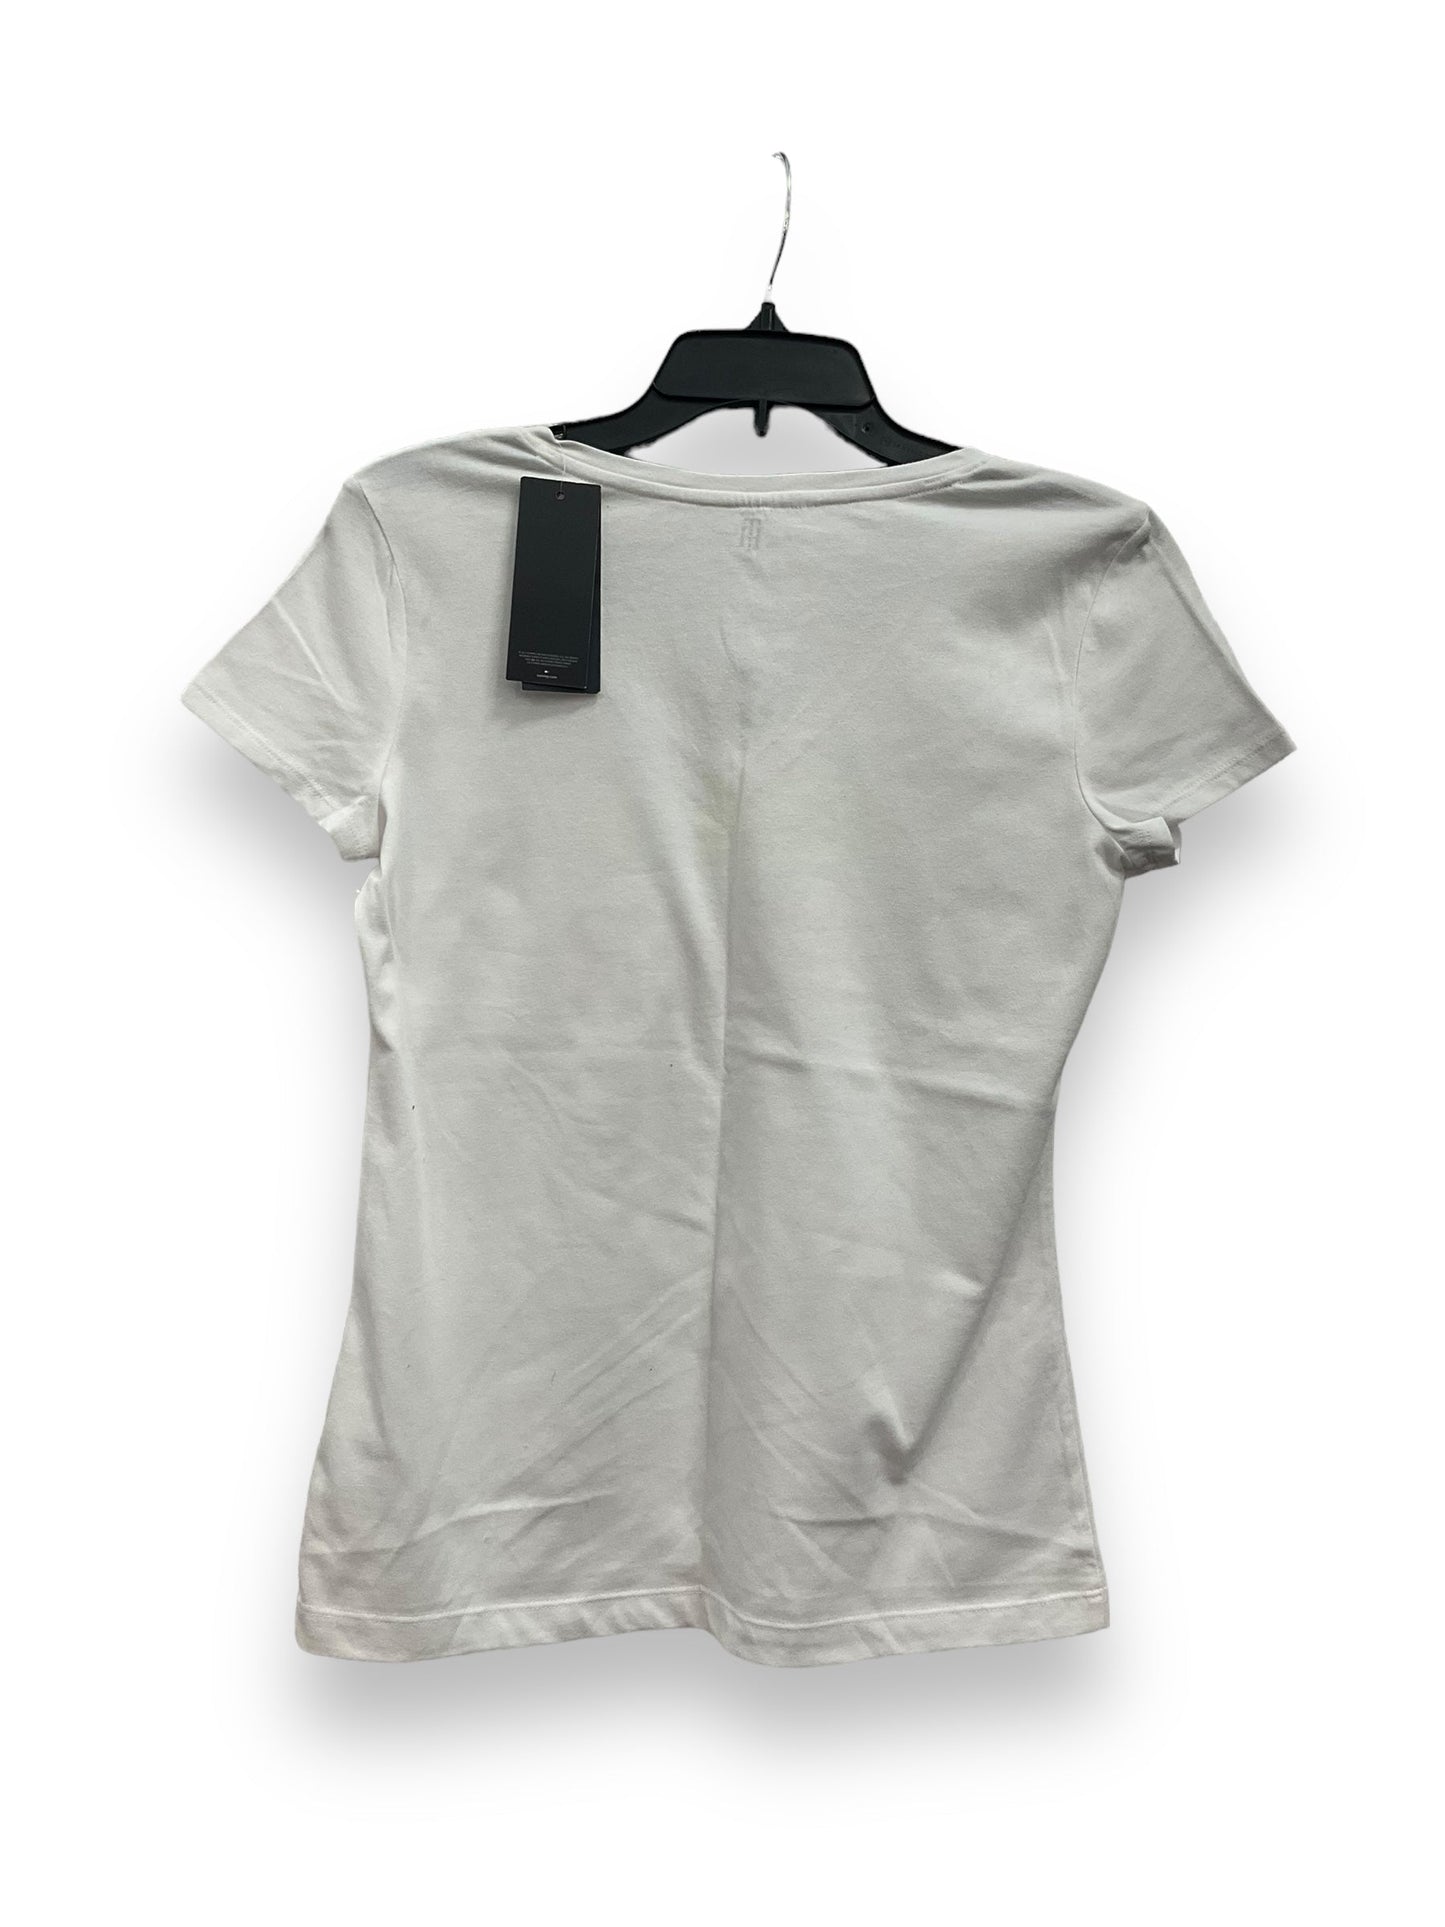 White Top Short Sleeve Basic Tommy Hilfiger, Size S